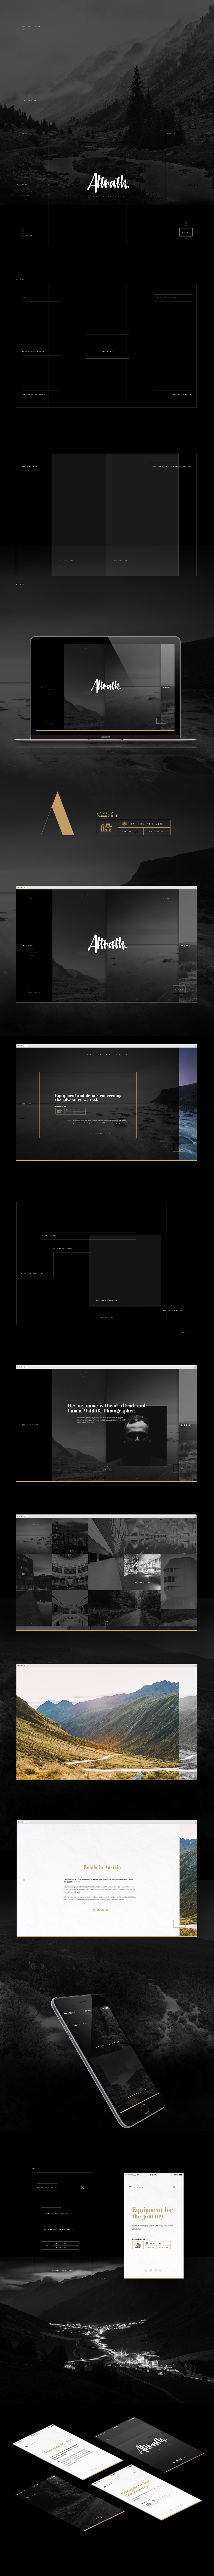 branding  design Webdesign Screendesign UI/UX CI corporatedesign Photography 